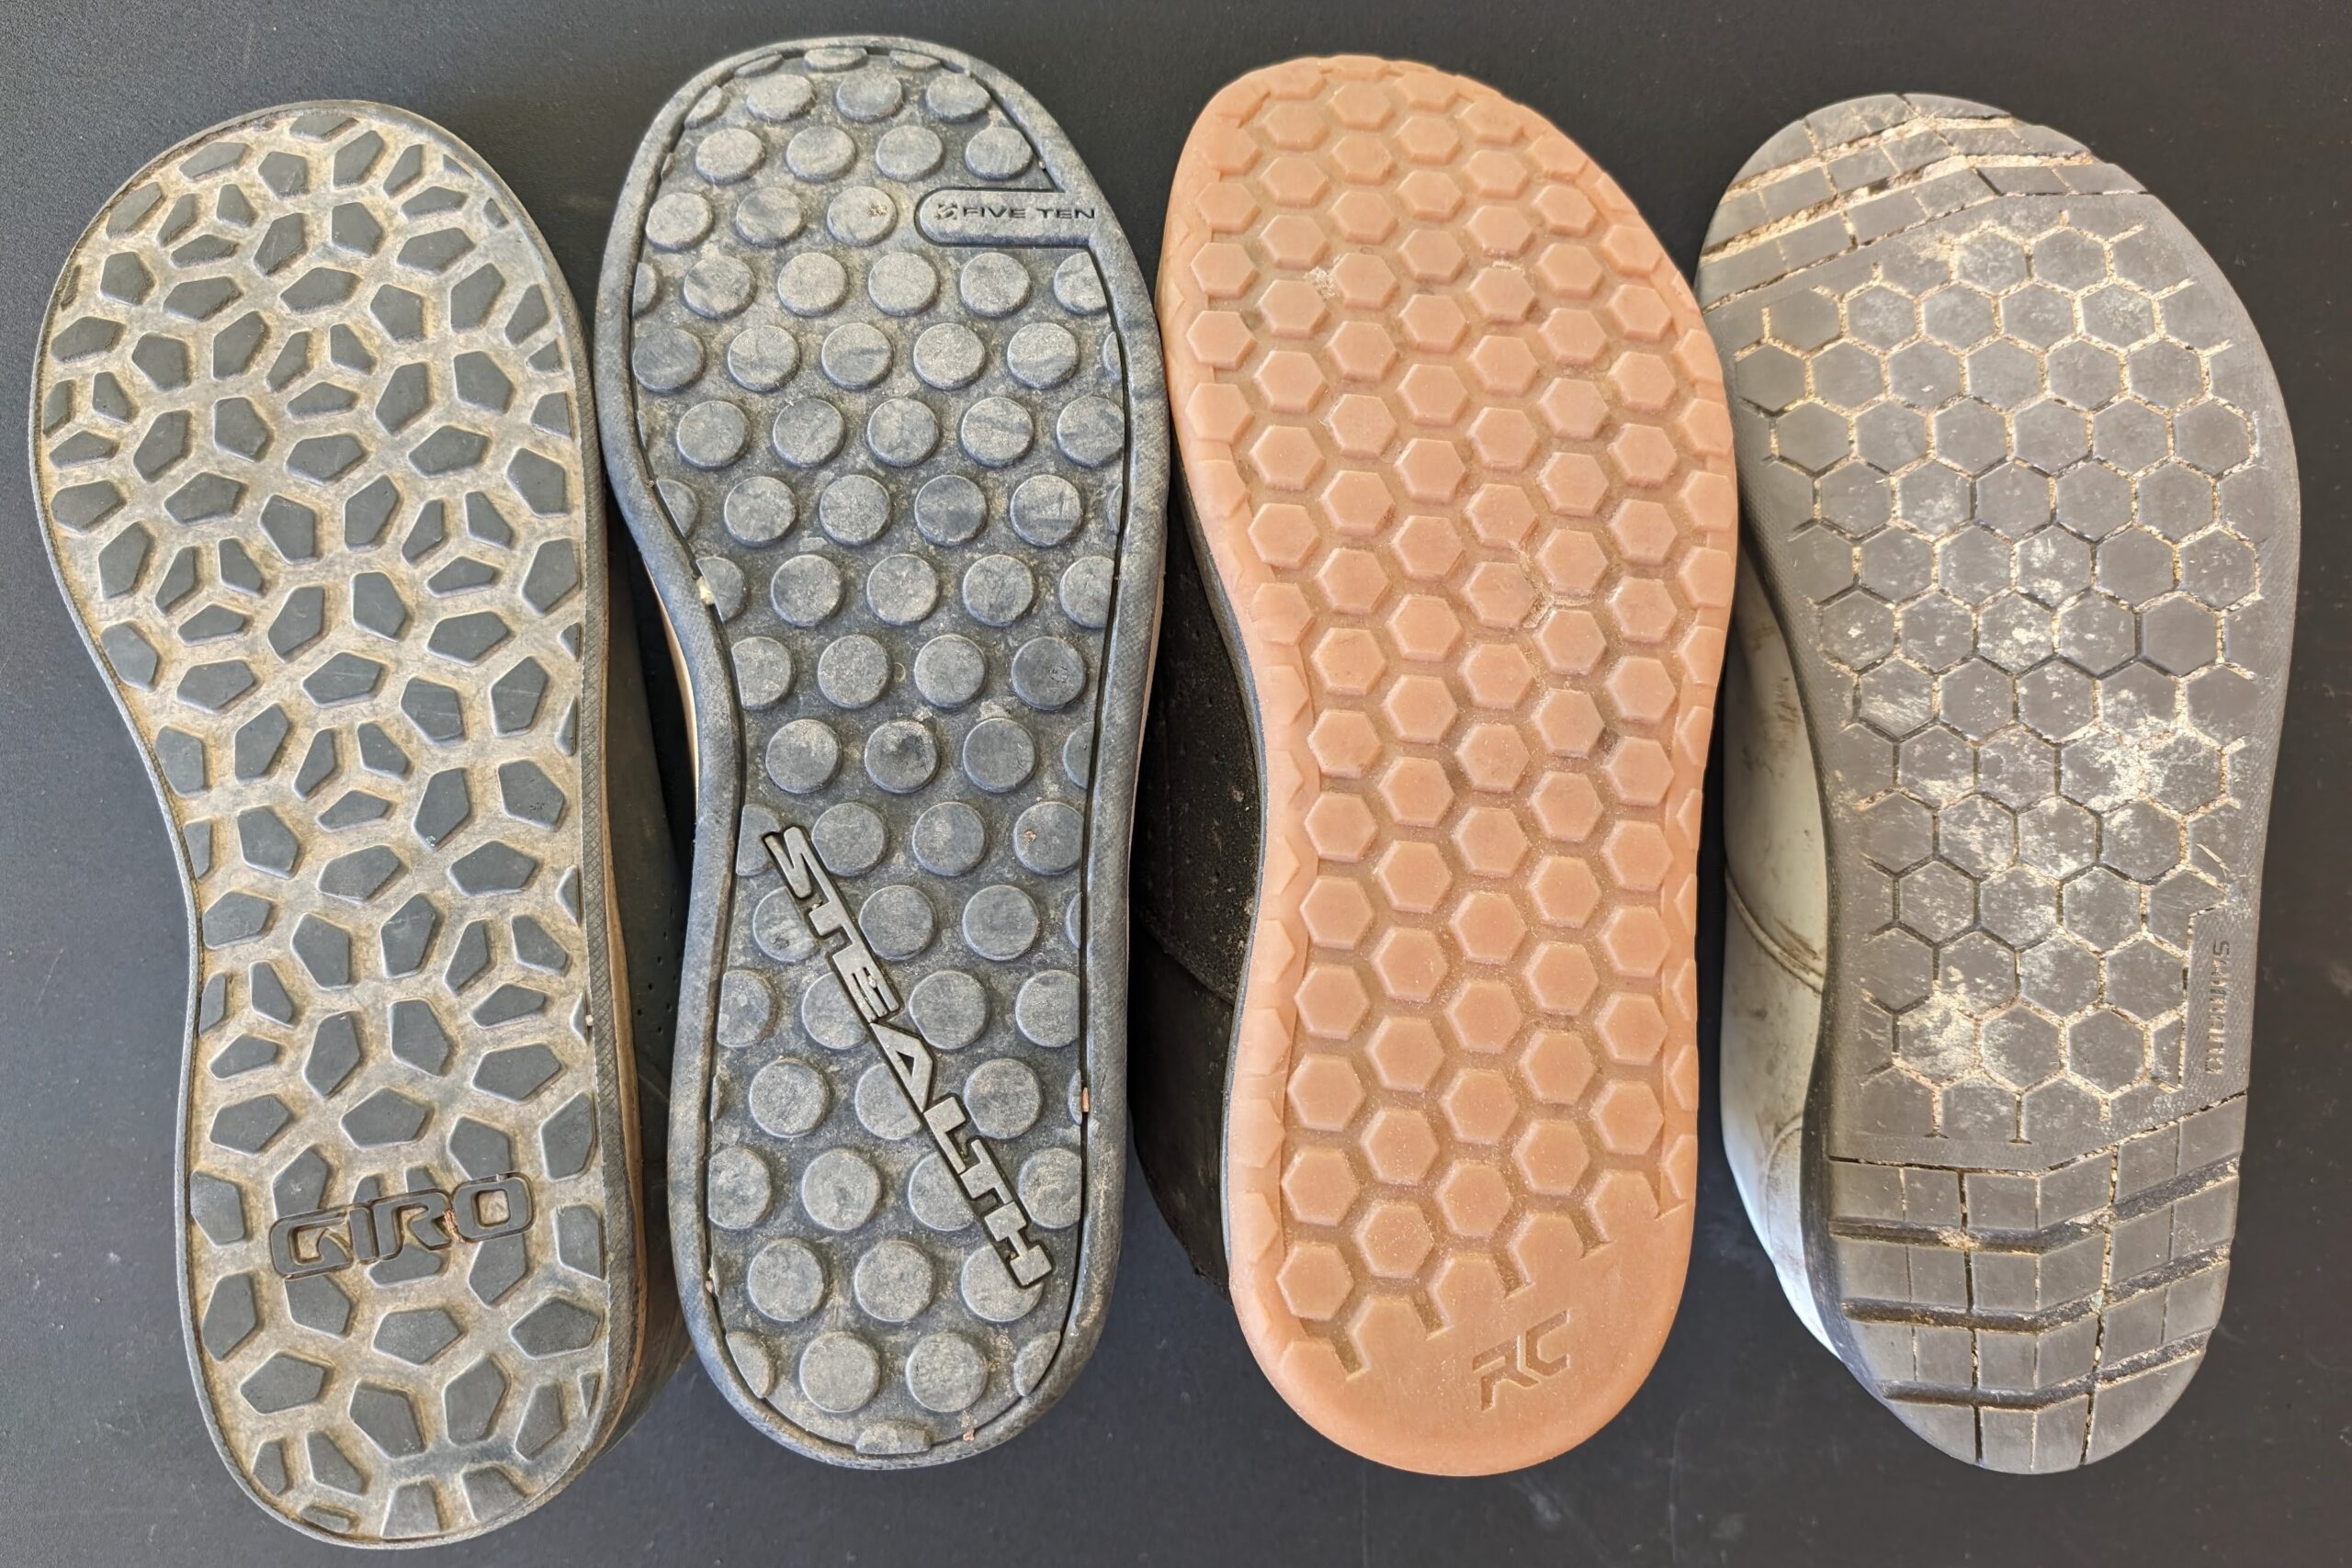 Comaprison shot of the soles of 4 flat pedal shoes